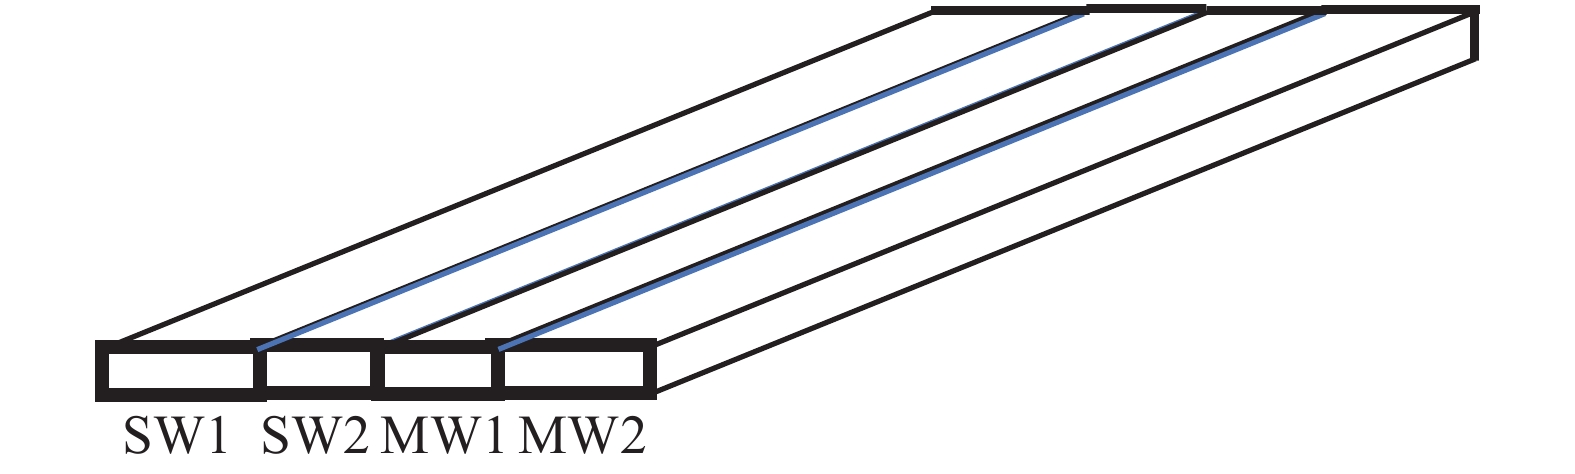 Structure diagram of 4-channel short/medim infrared LLASIF